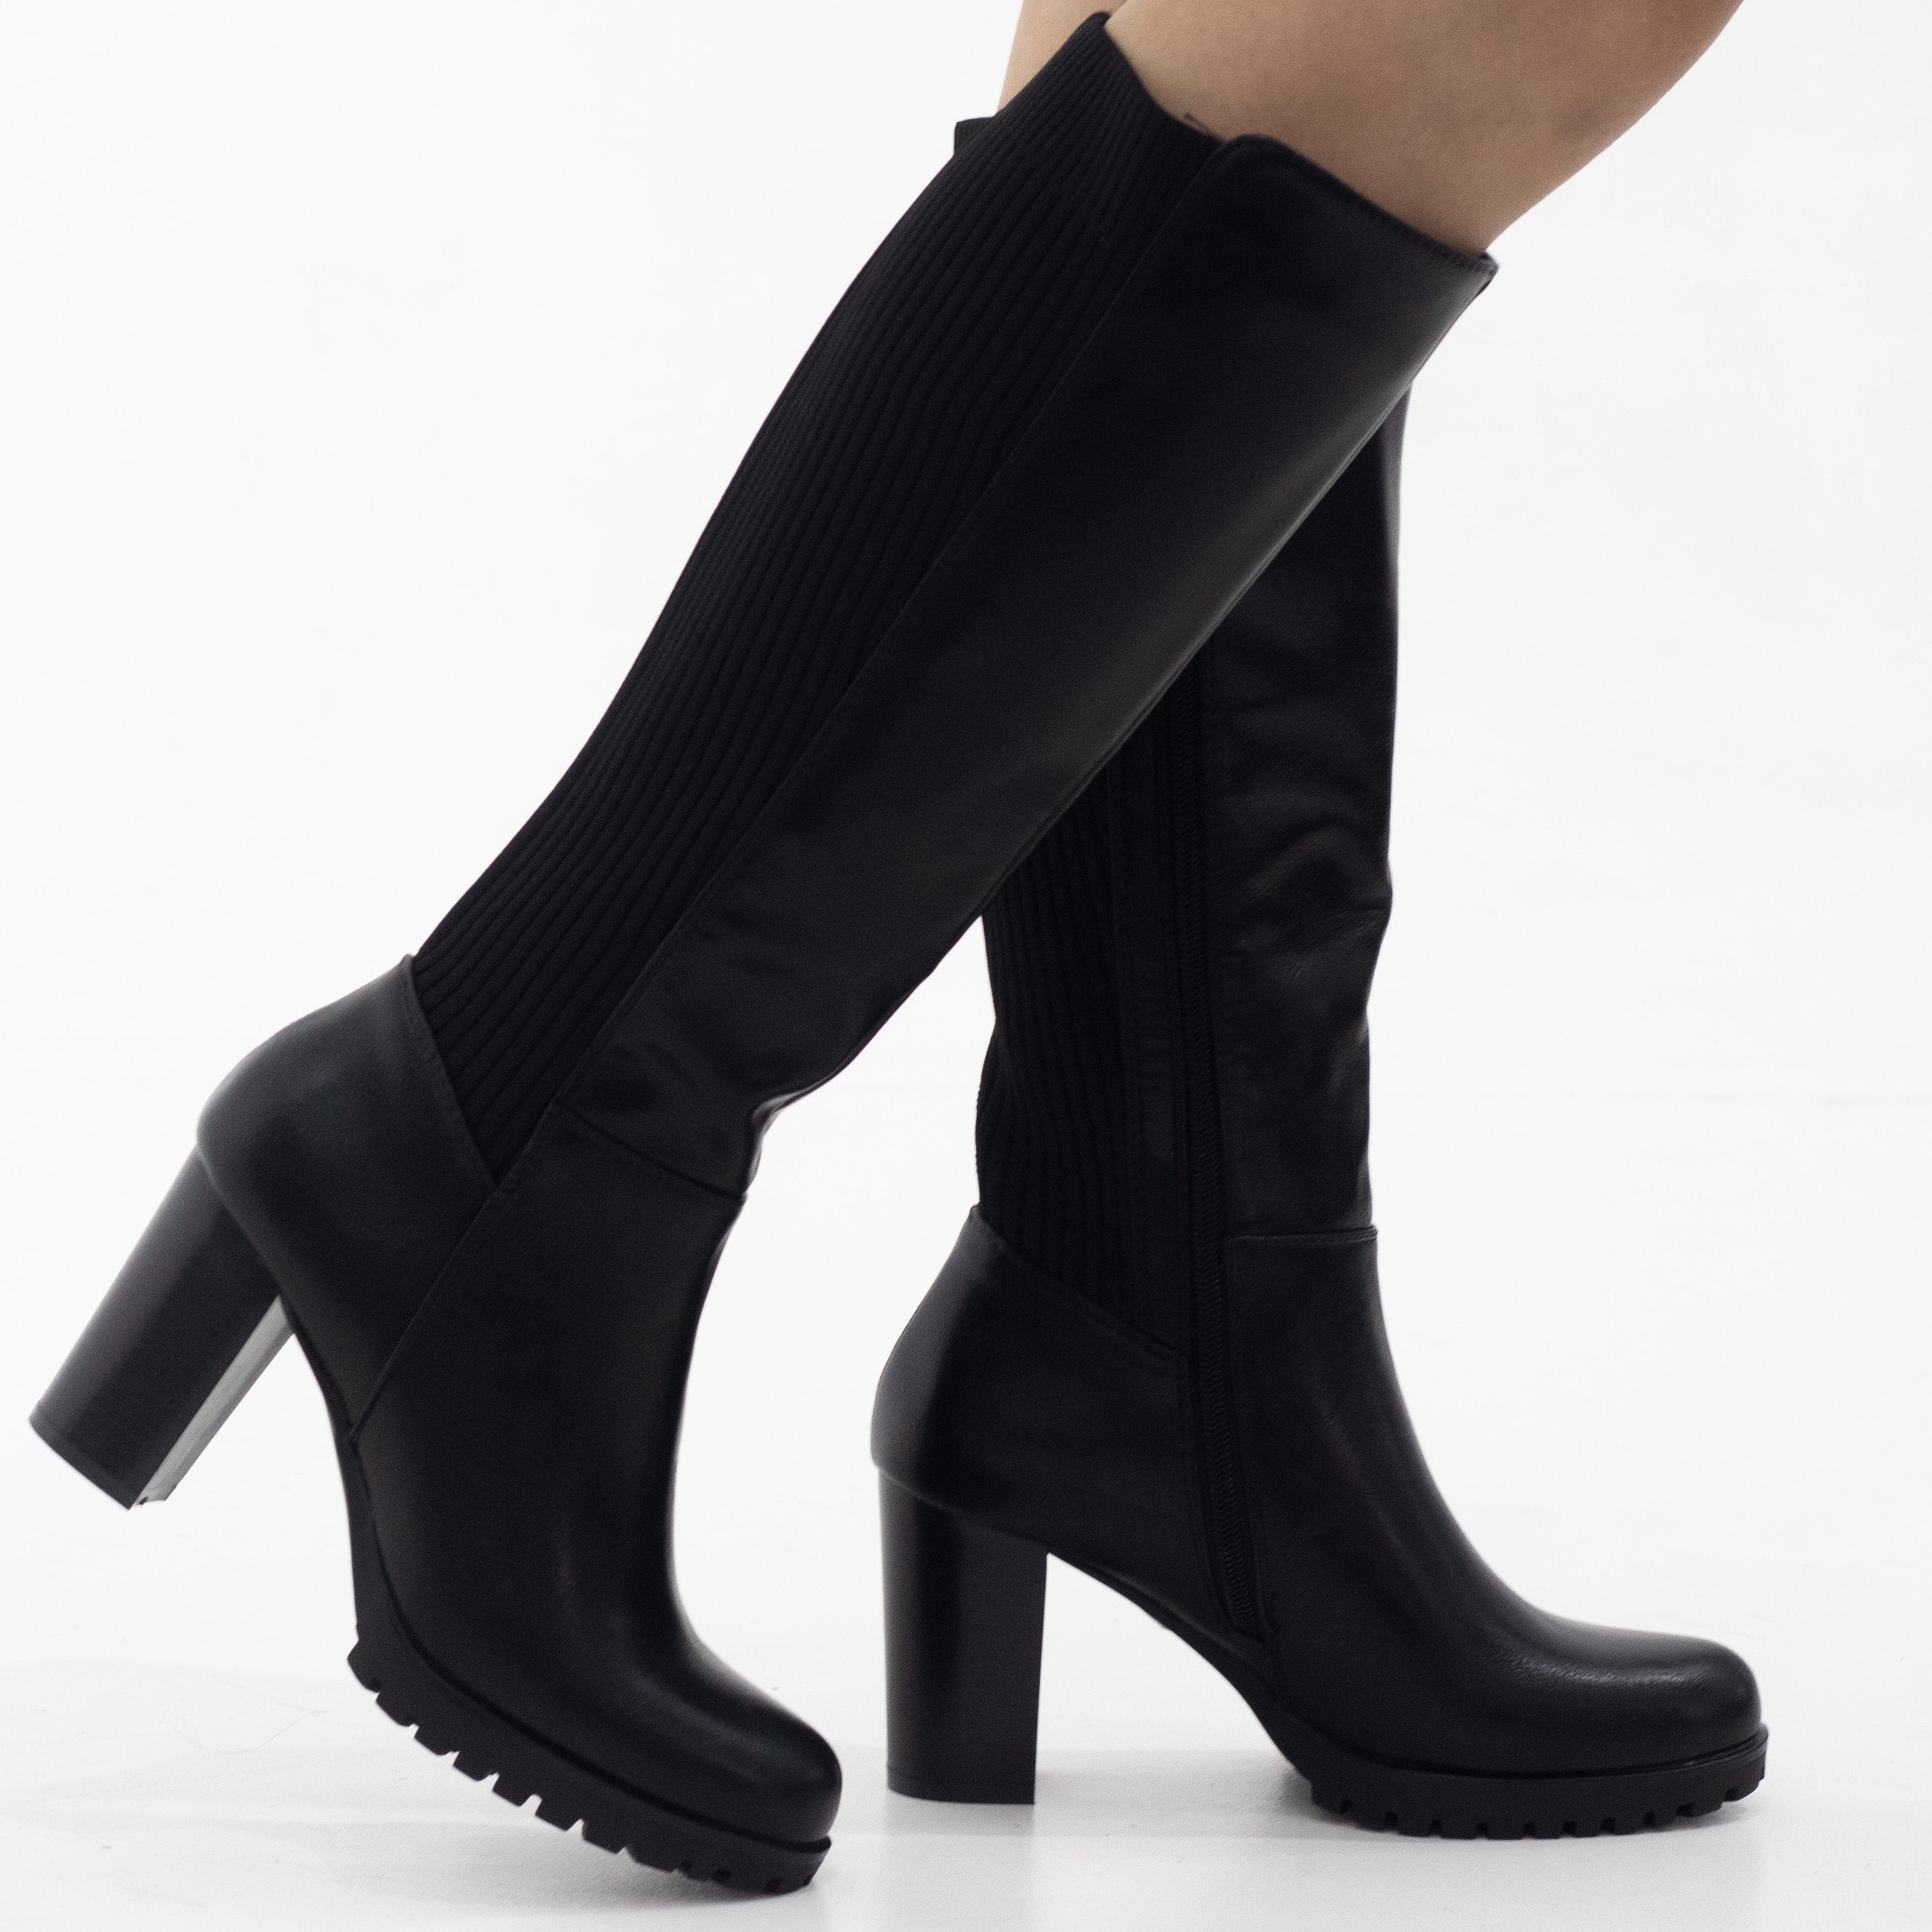 Yahira knee high with sock mat boots 8cm heel black